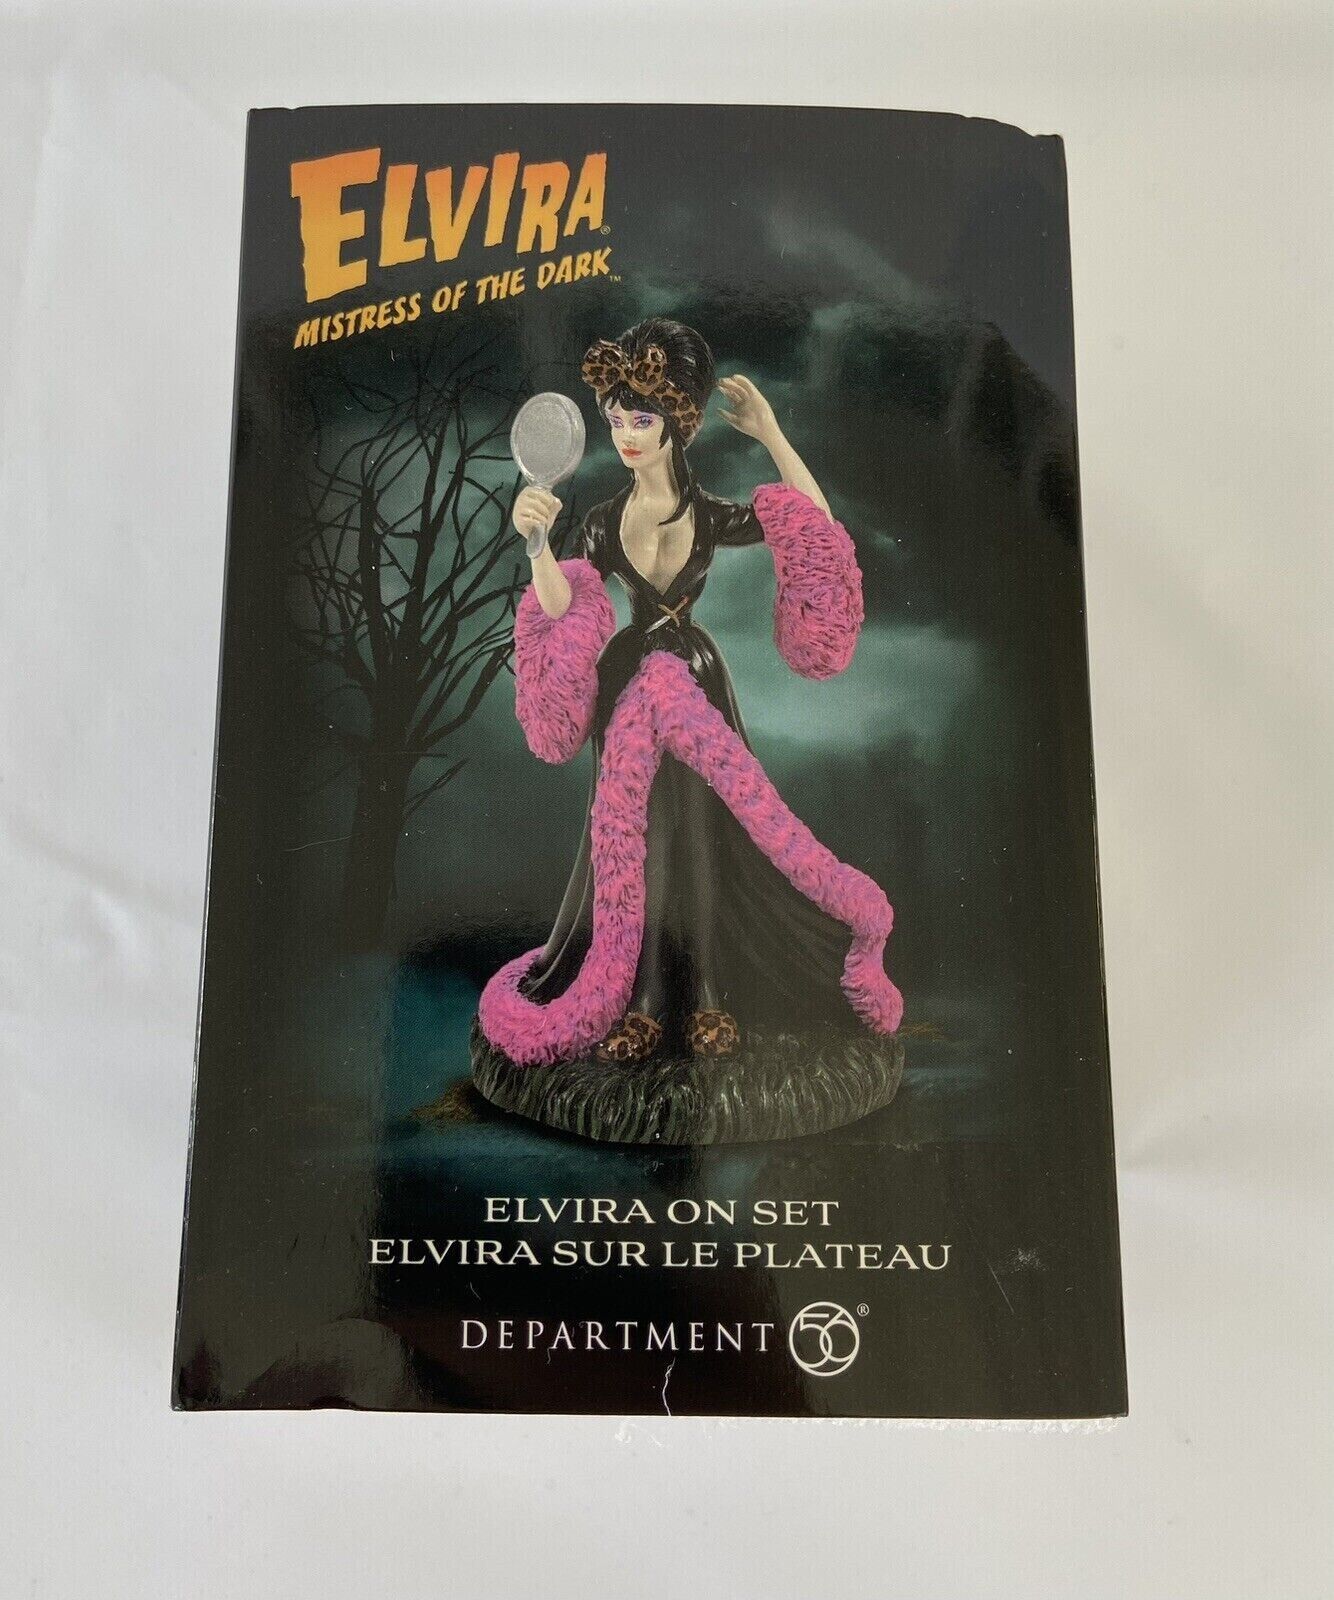 Dept 56 Elvira Mistress Of The Dark Elvira On Set 6009787 MIP 